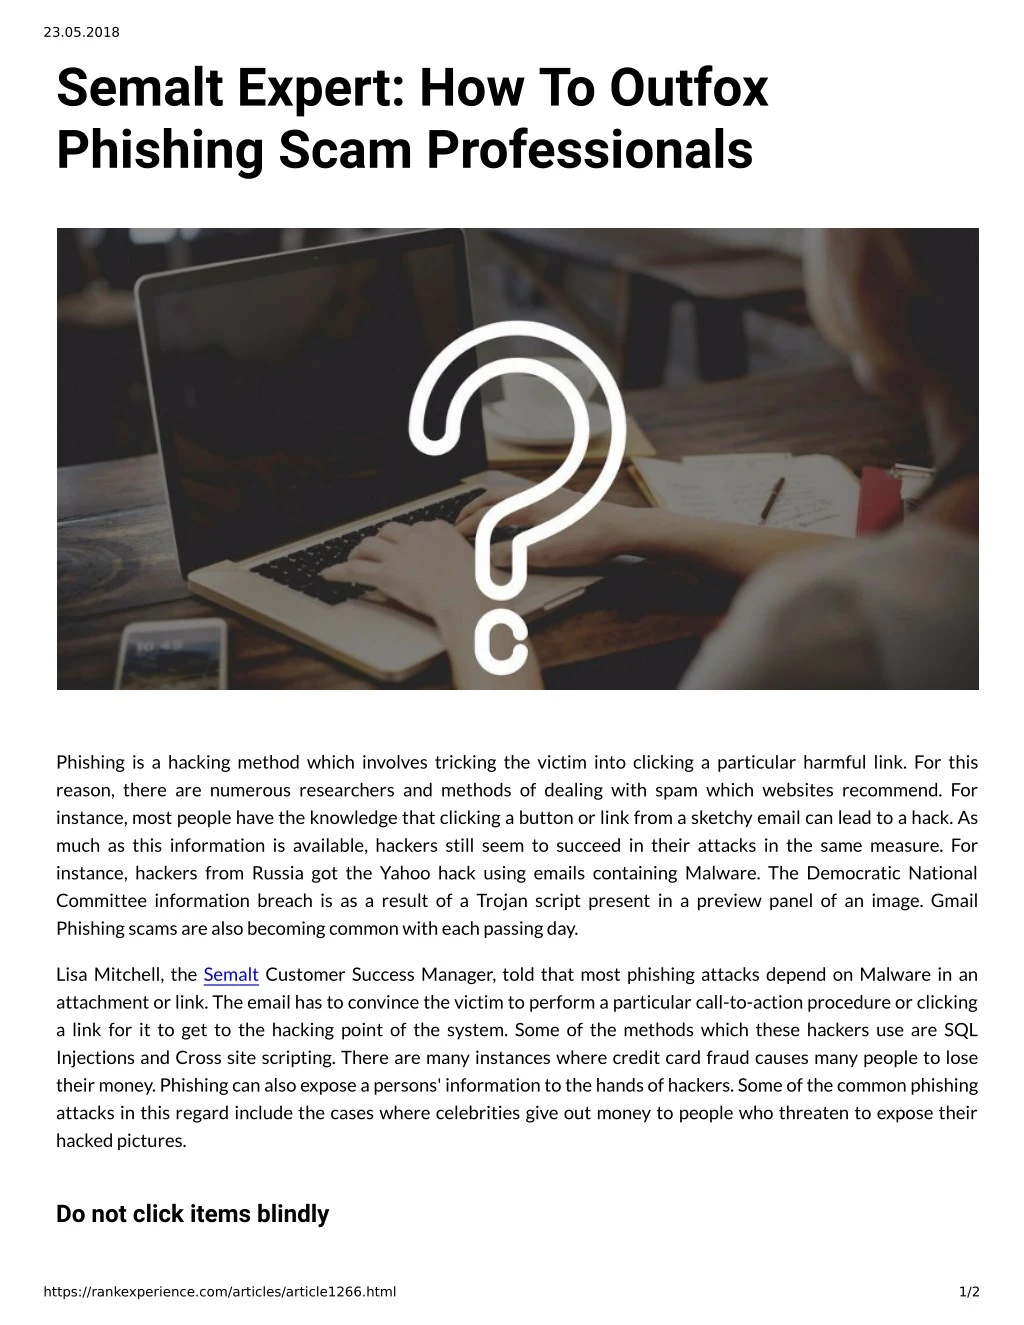 23 05 2018 semalt expert how to outfox phishing